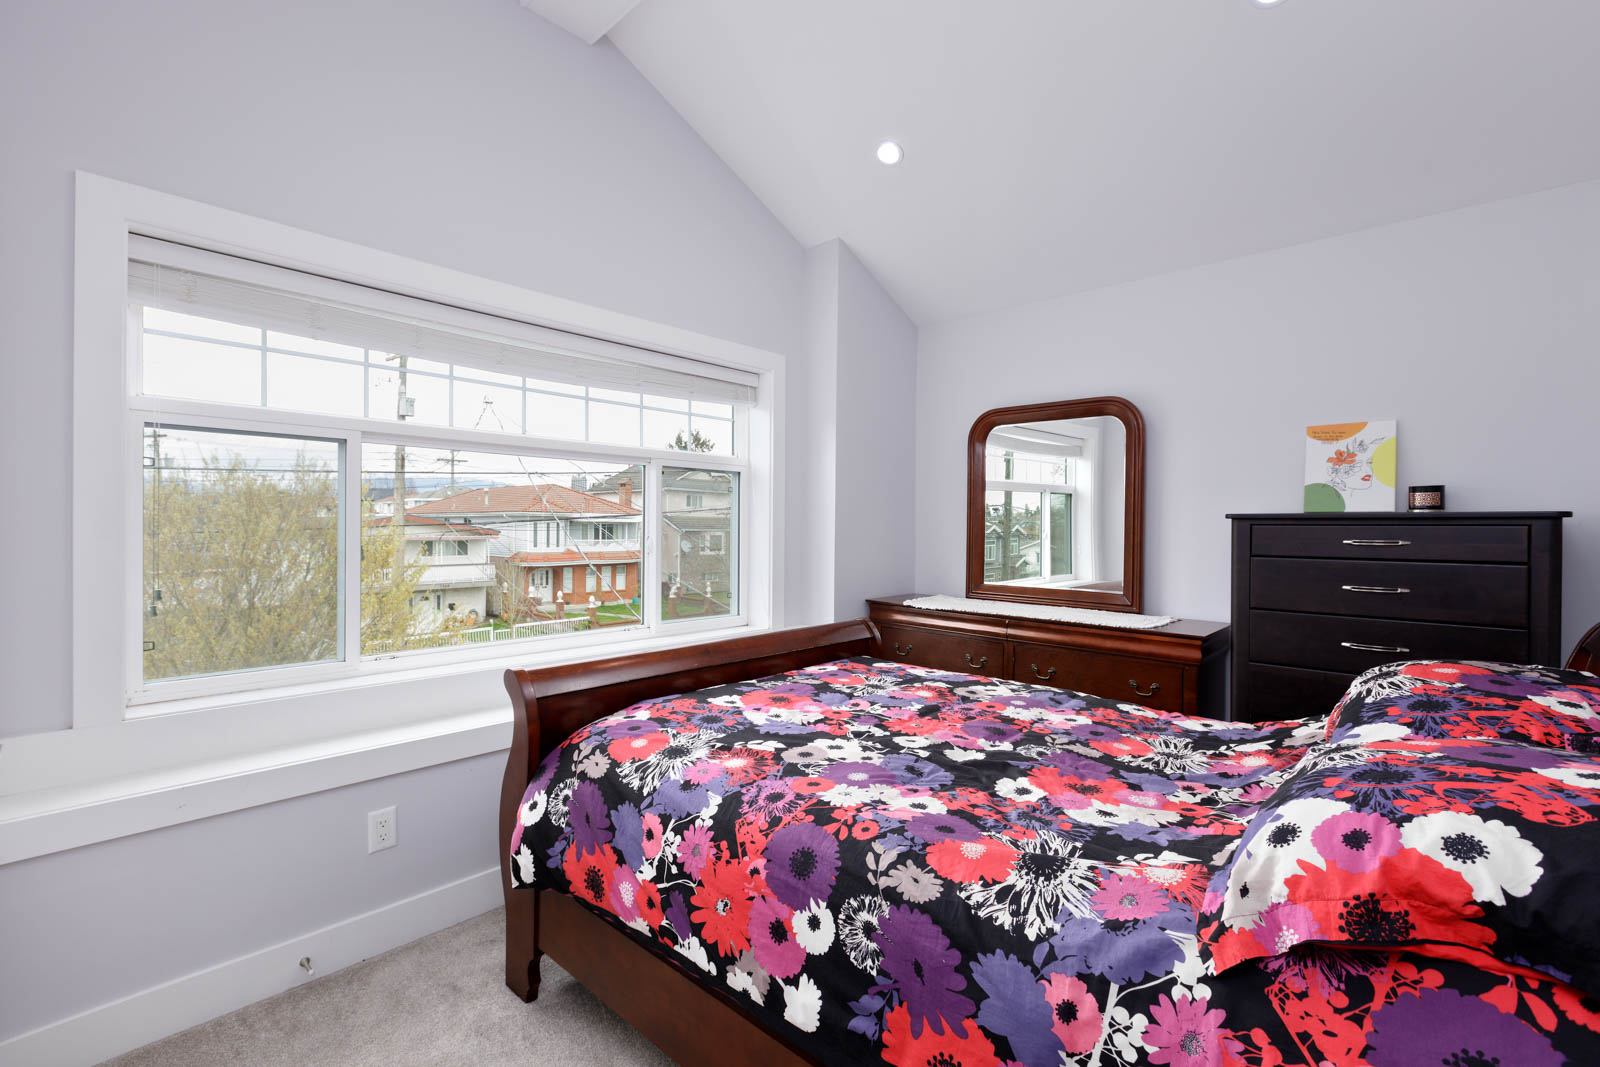 bedroom with large window, carpet floors